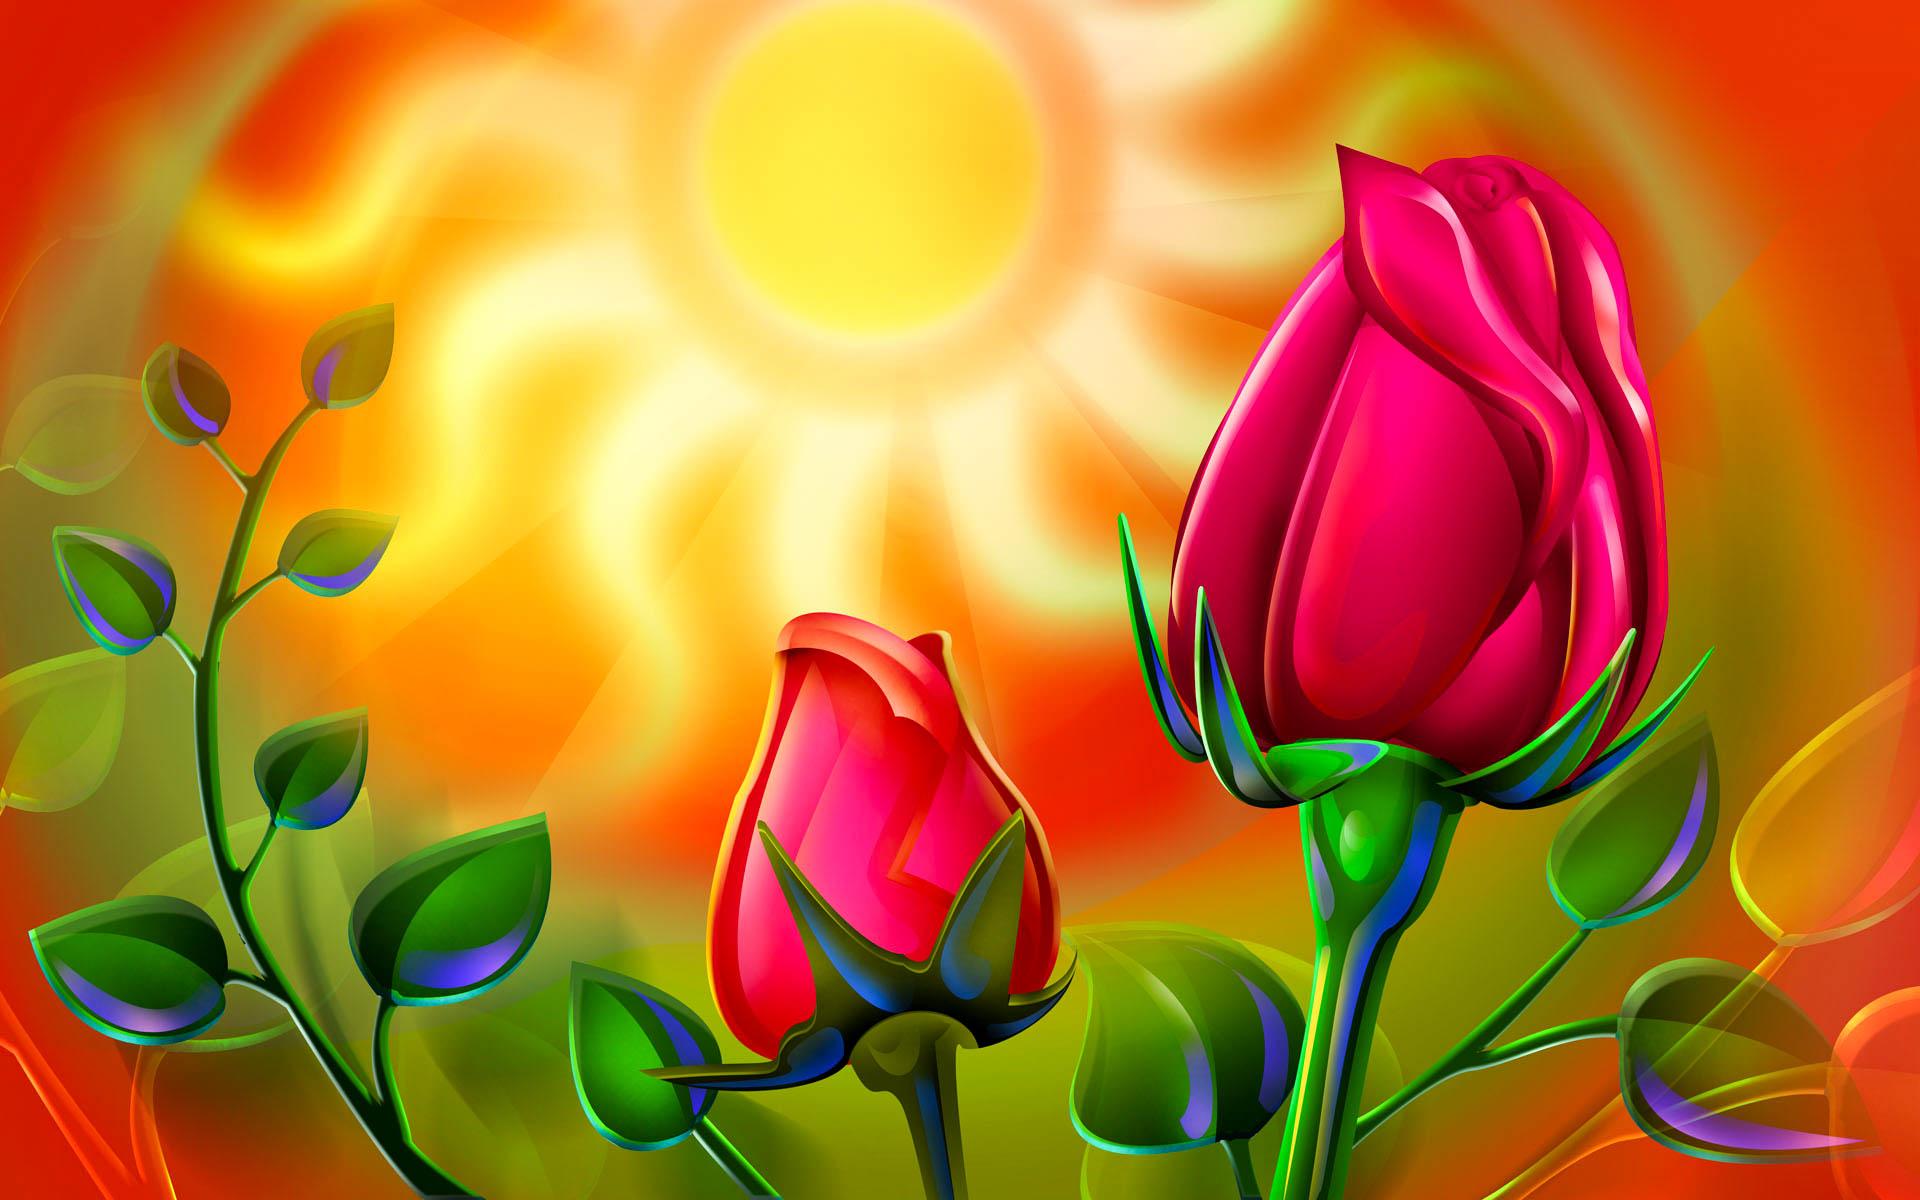 World's Beautiful Flowers Image Wallpaper Photo Free Download